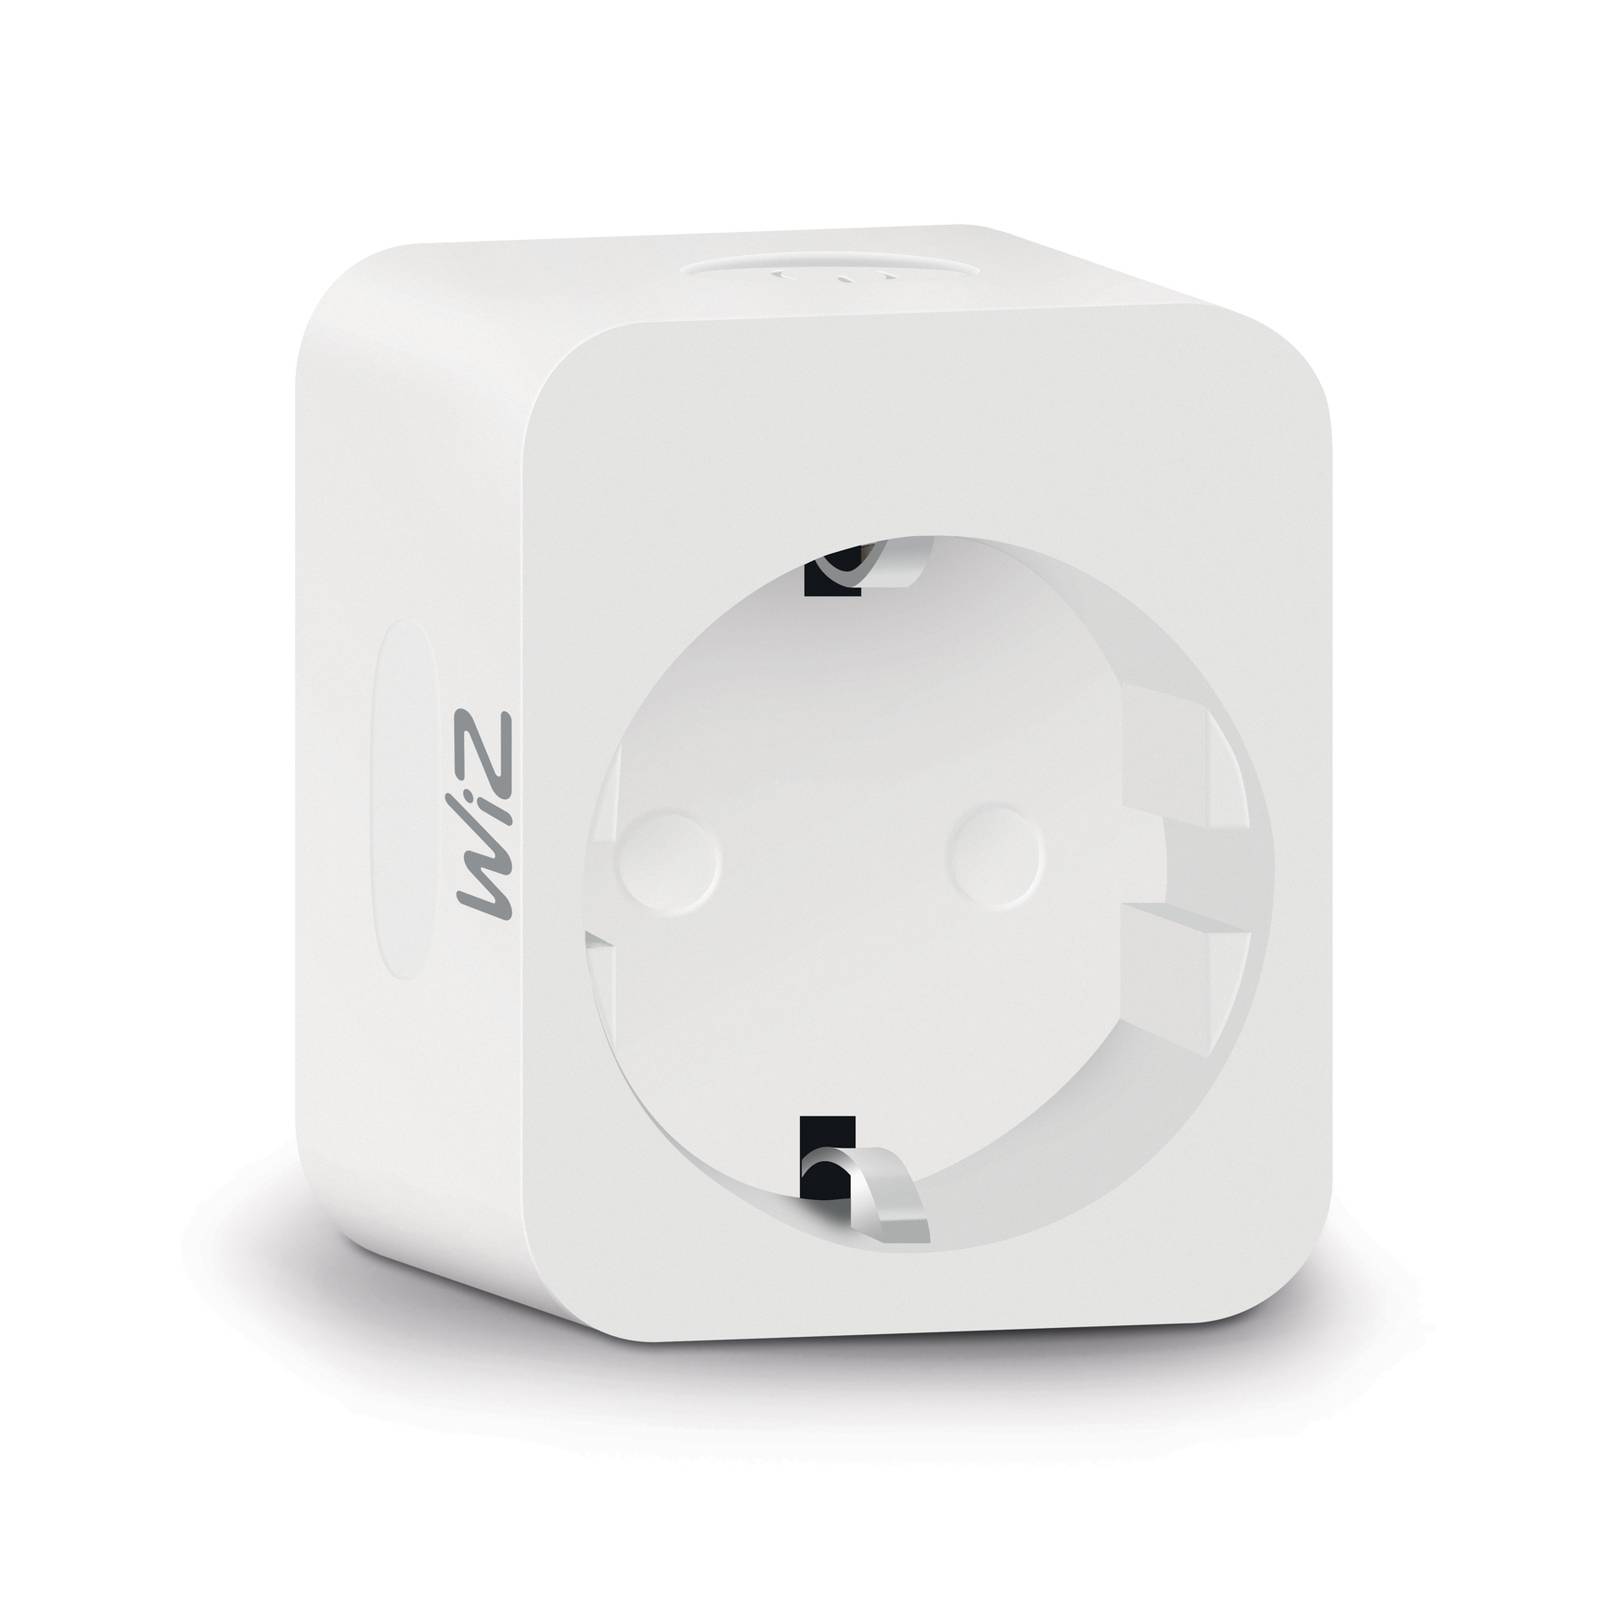 WiZ Smart Plug F típusú konnektor világítás vez.